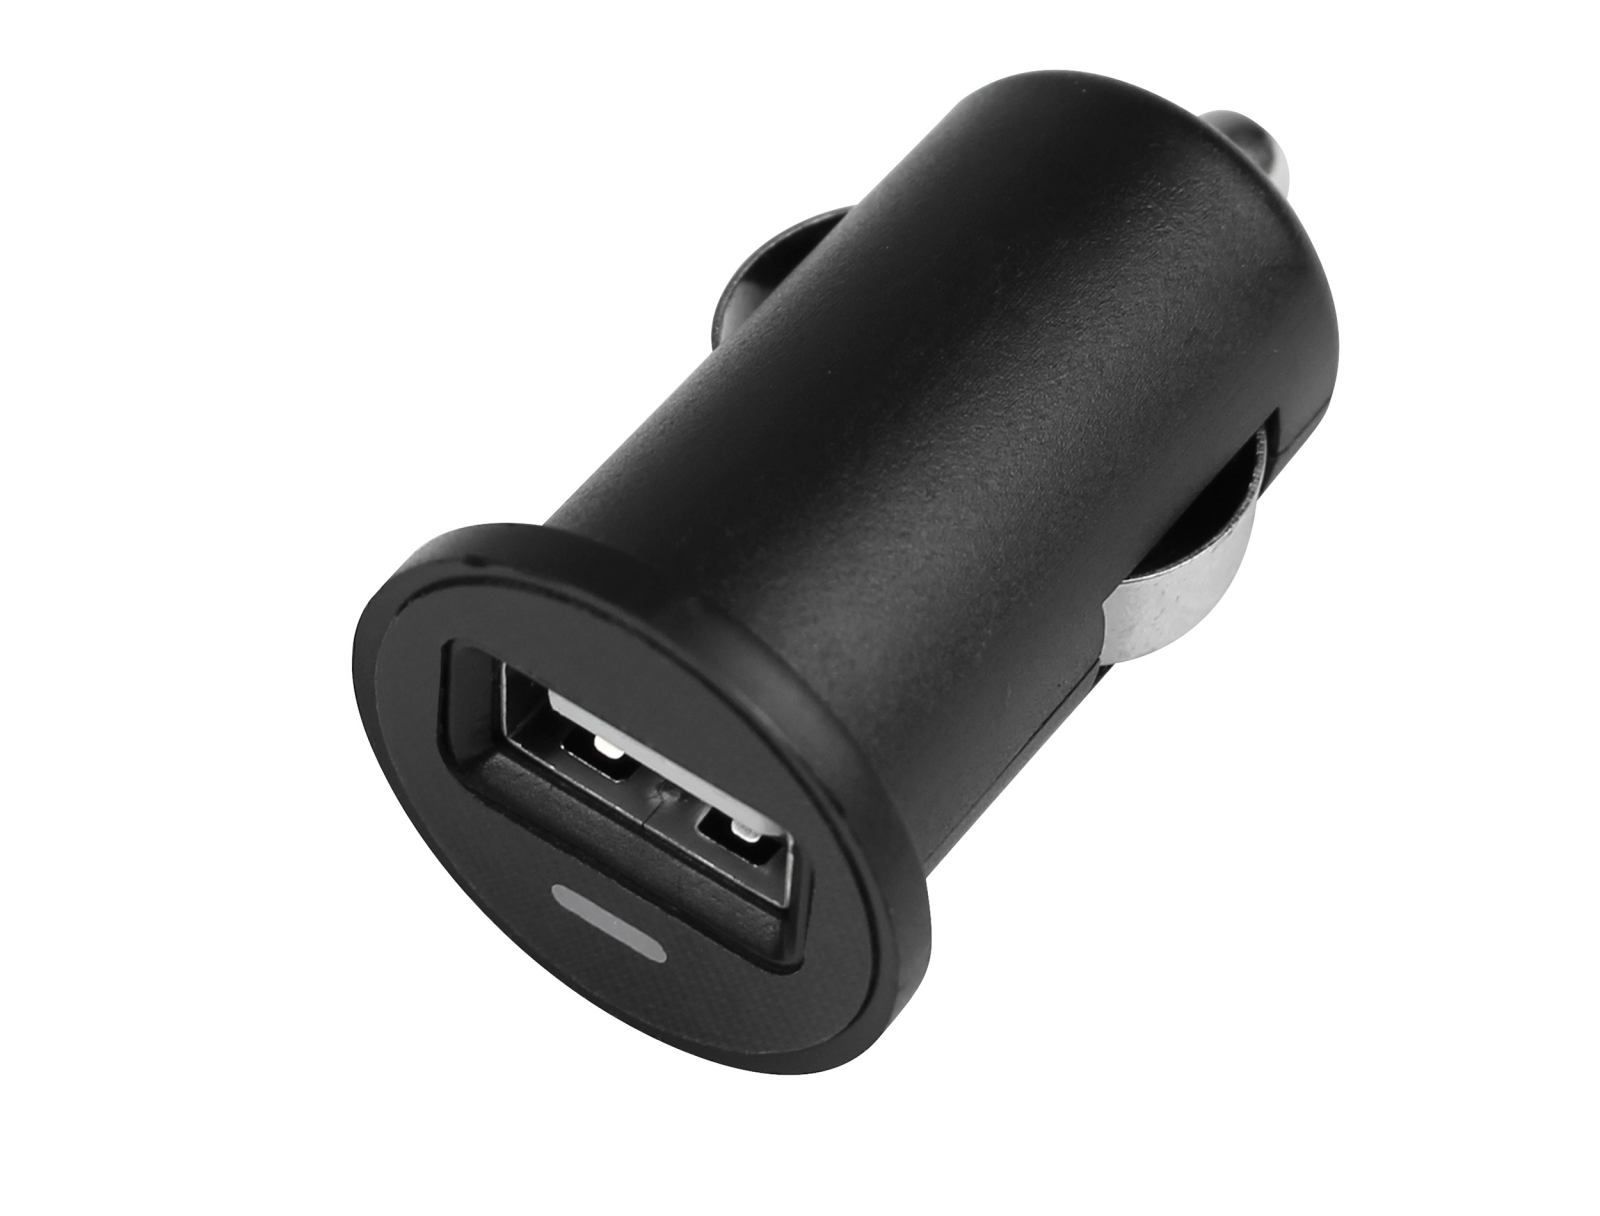 Chargeur USB pour allume-cigares véhicule automobile 12/24V | EUFAB